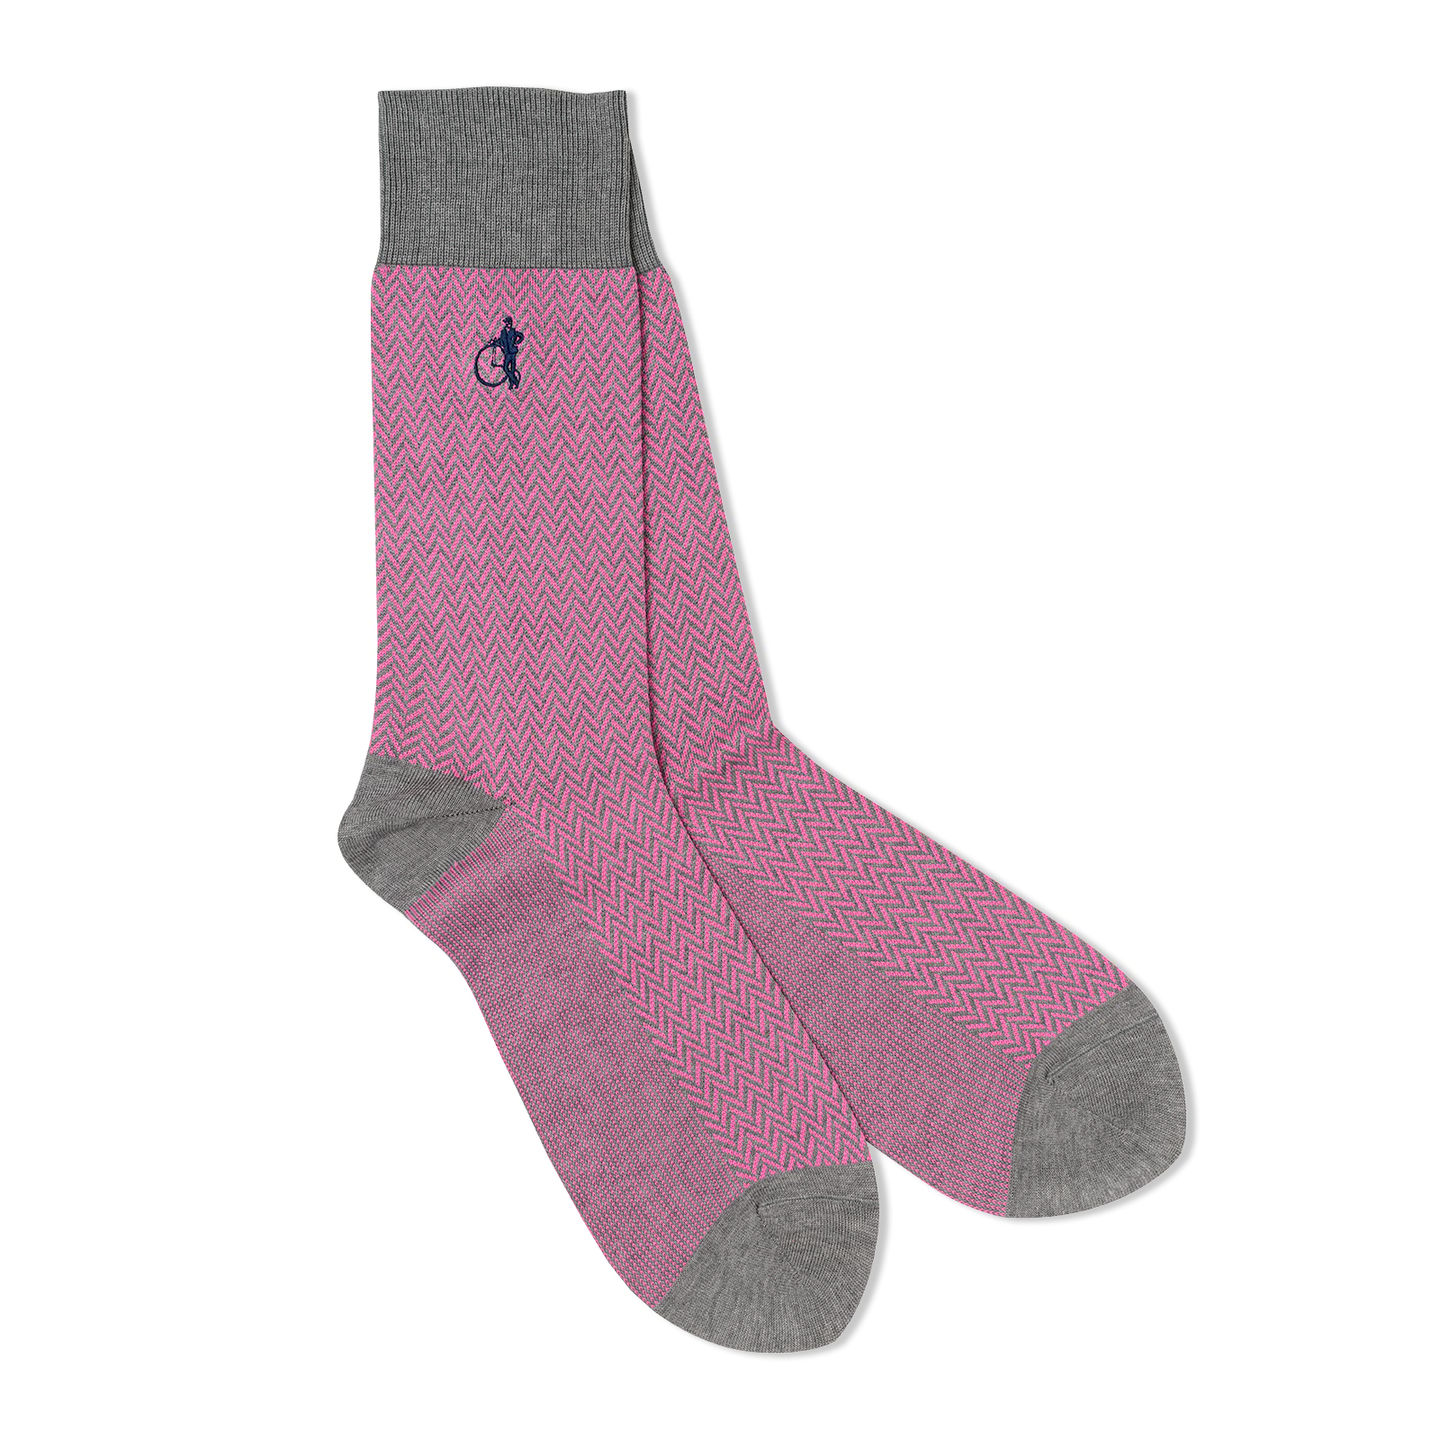 Herringbone zig zag patterned socks in pink and grey